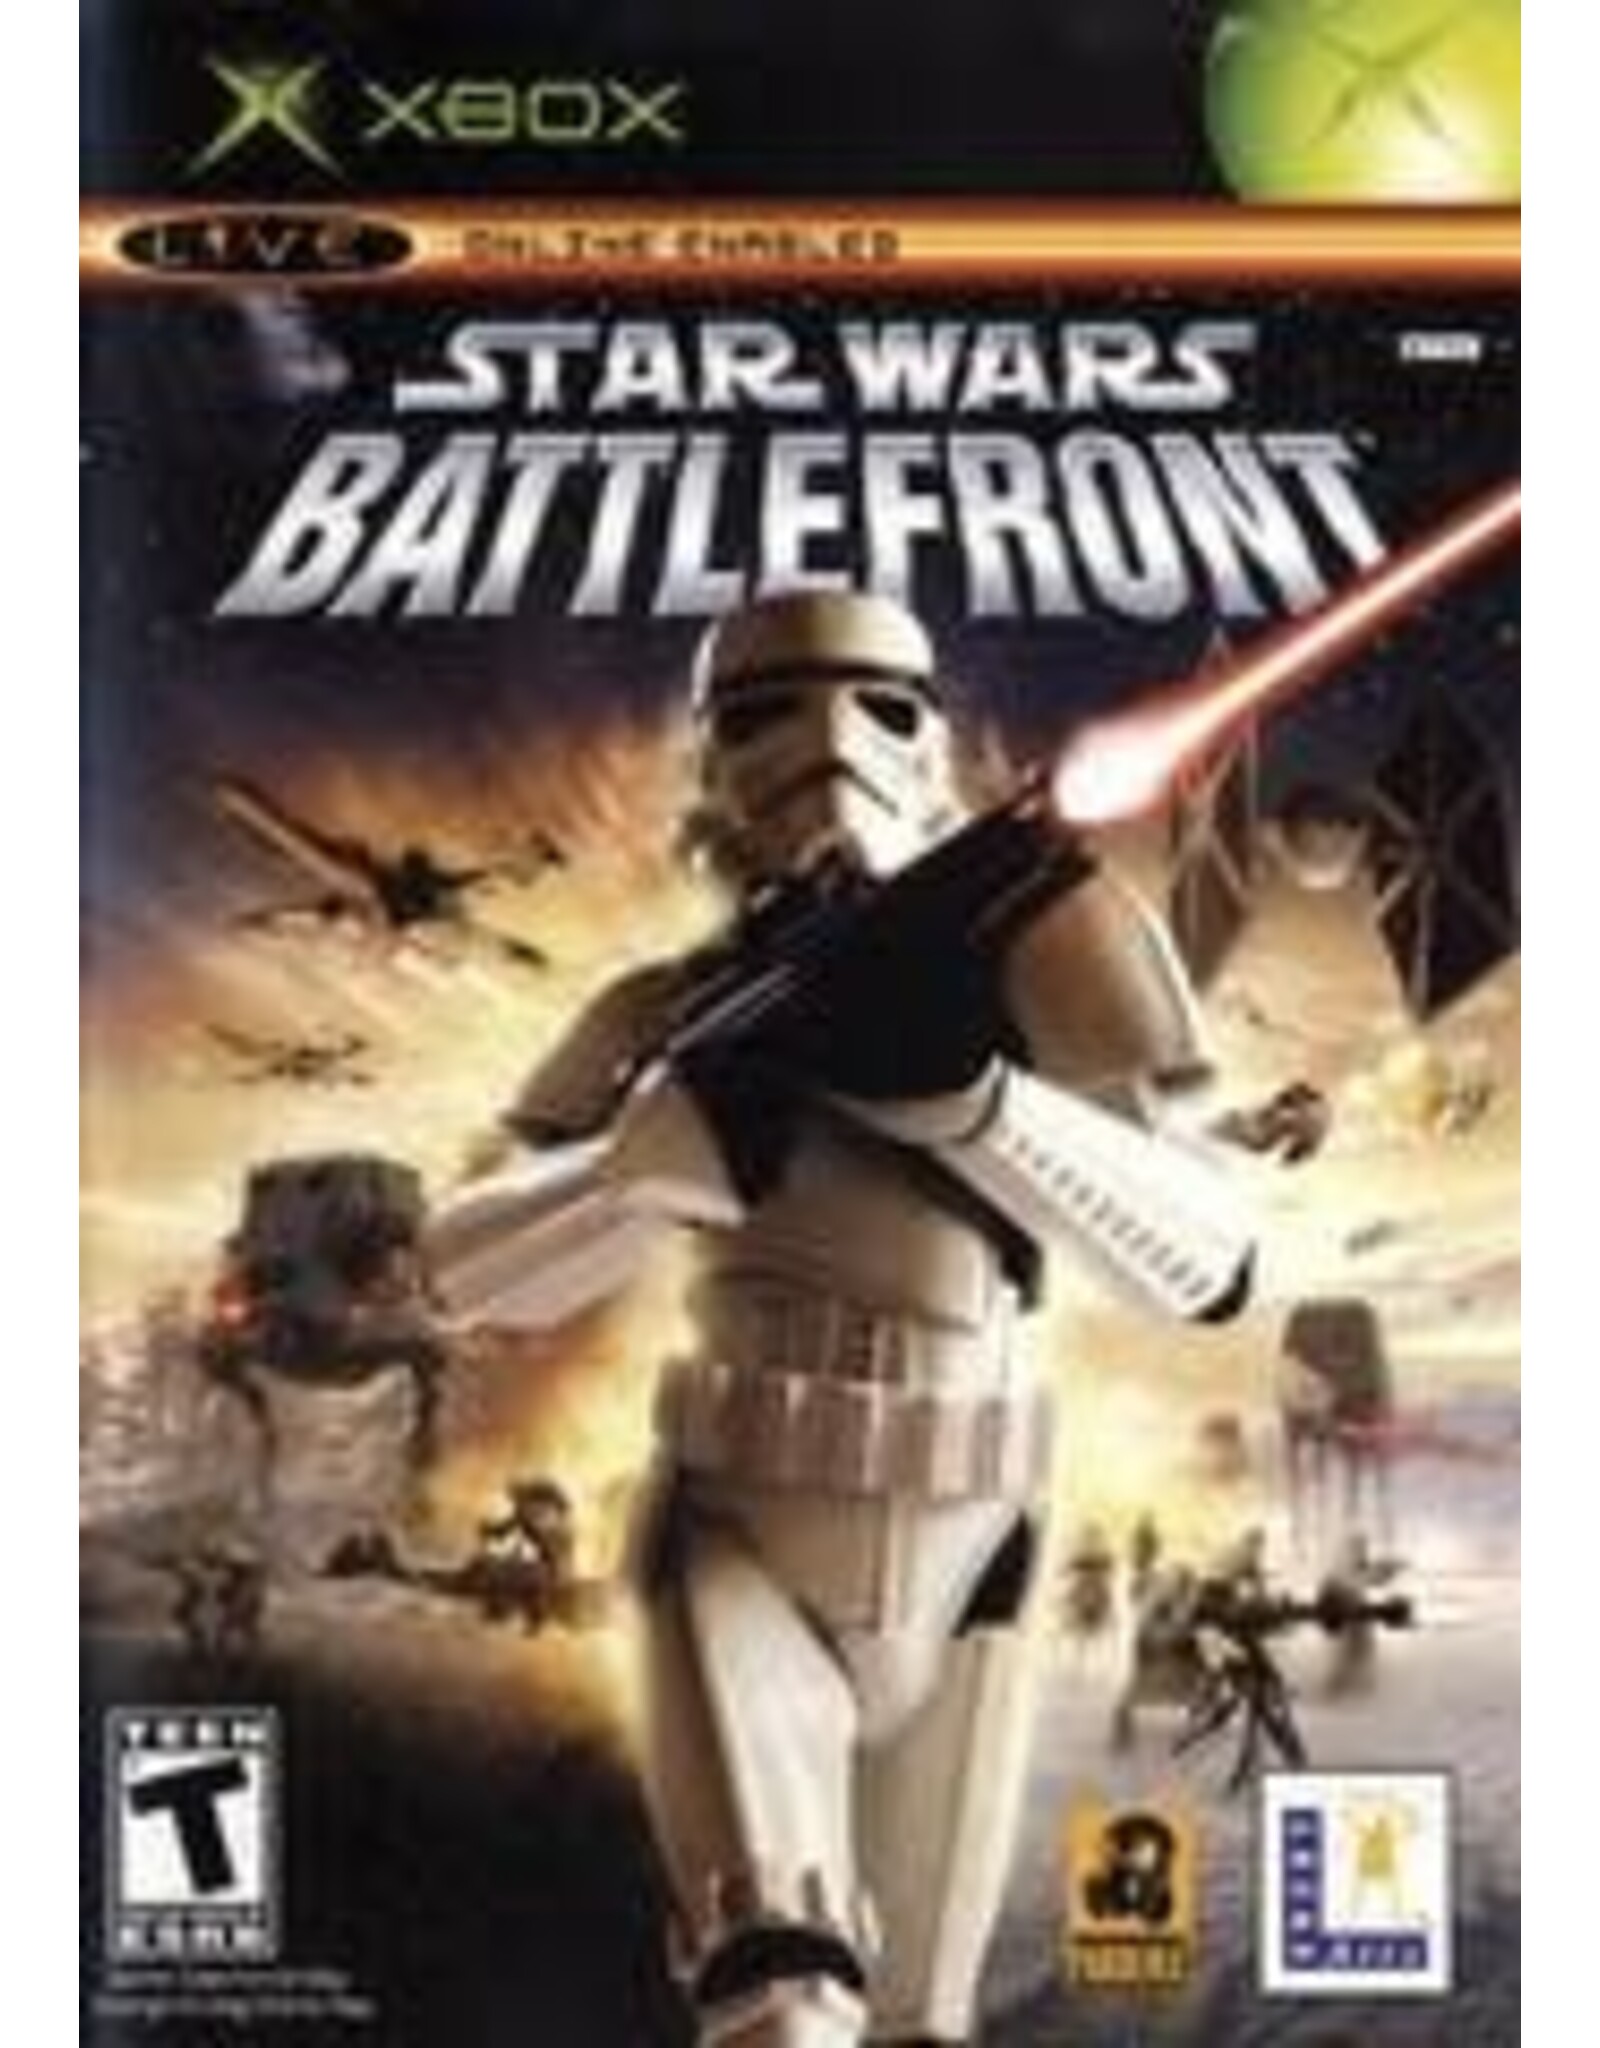 Xbox Star Wars Battlefront (No Manual)